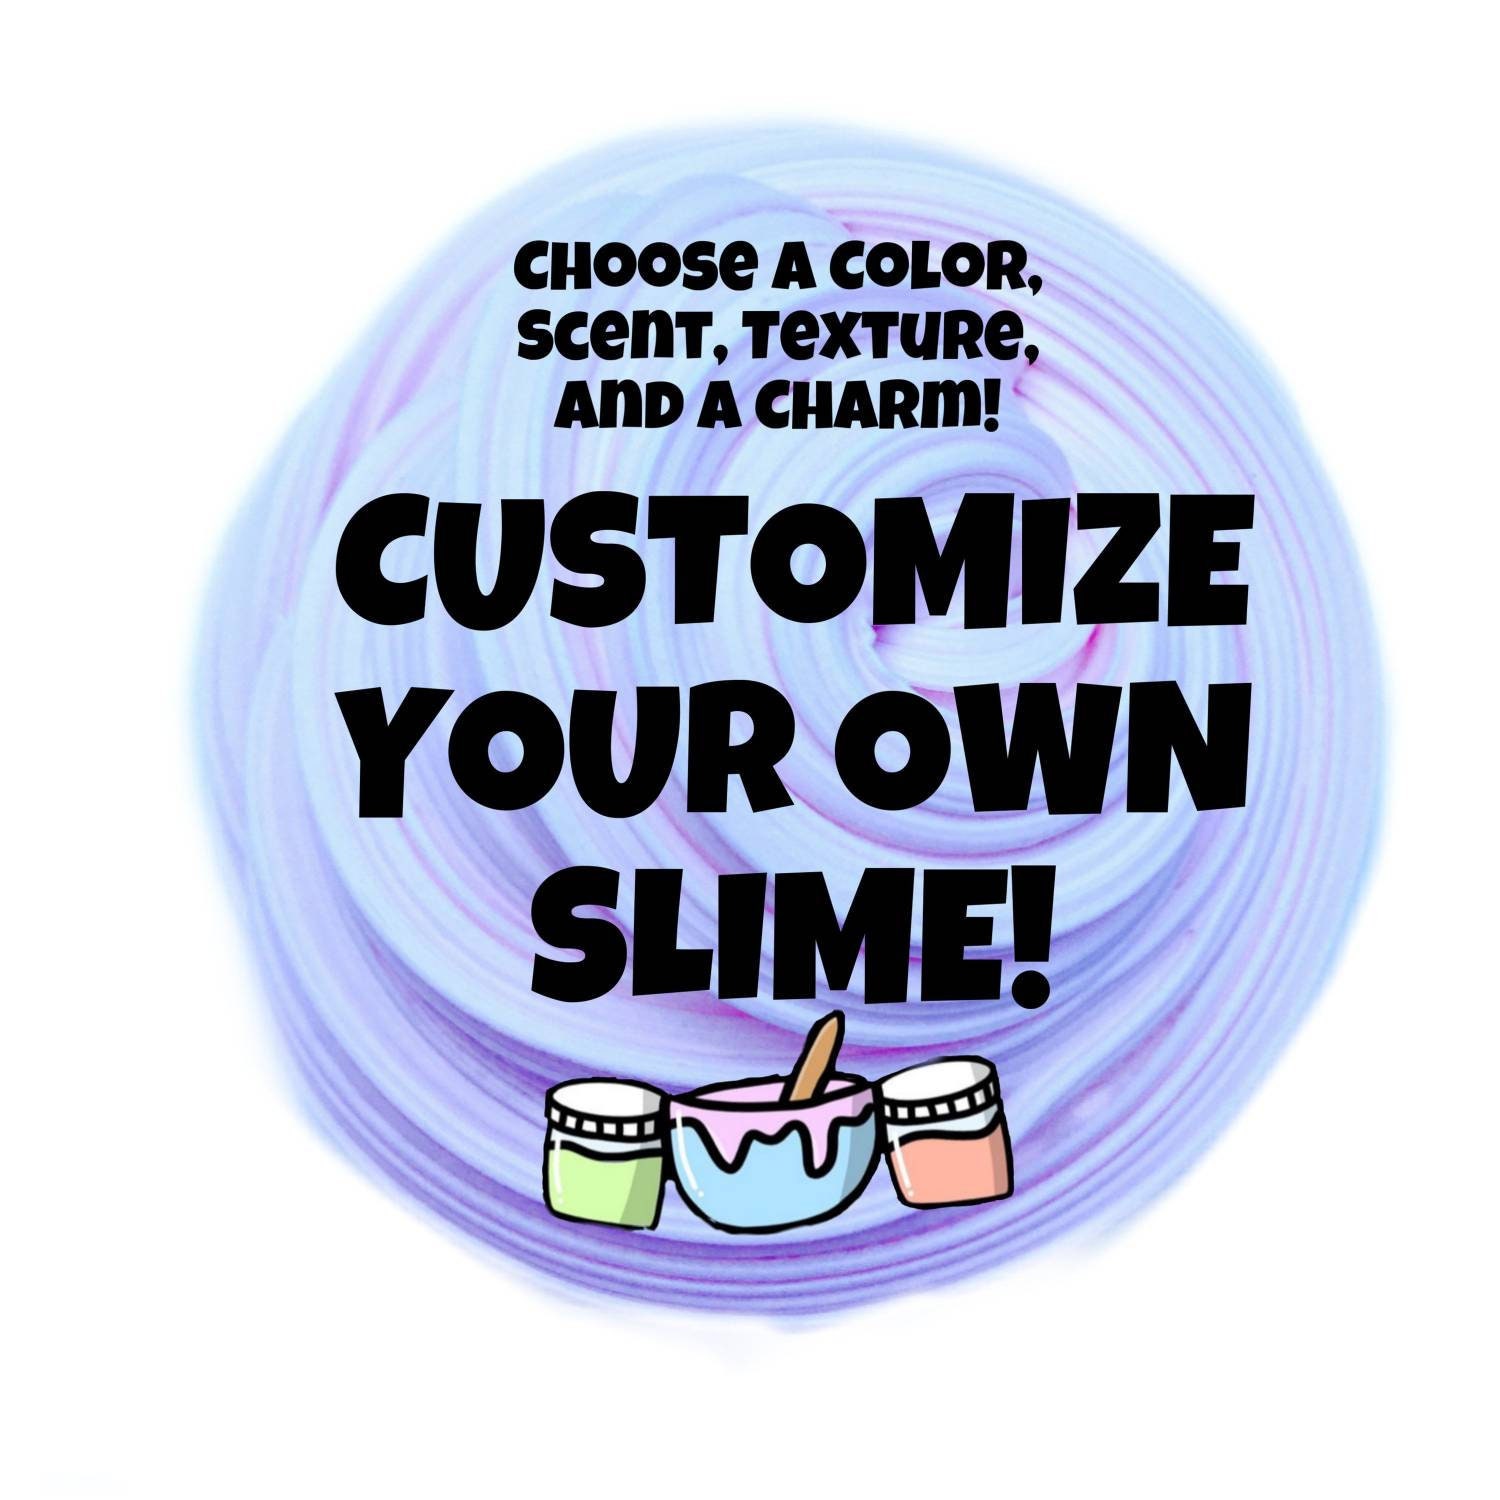 Build Your Own Custom Slime